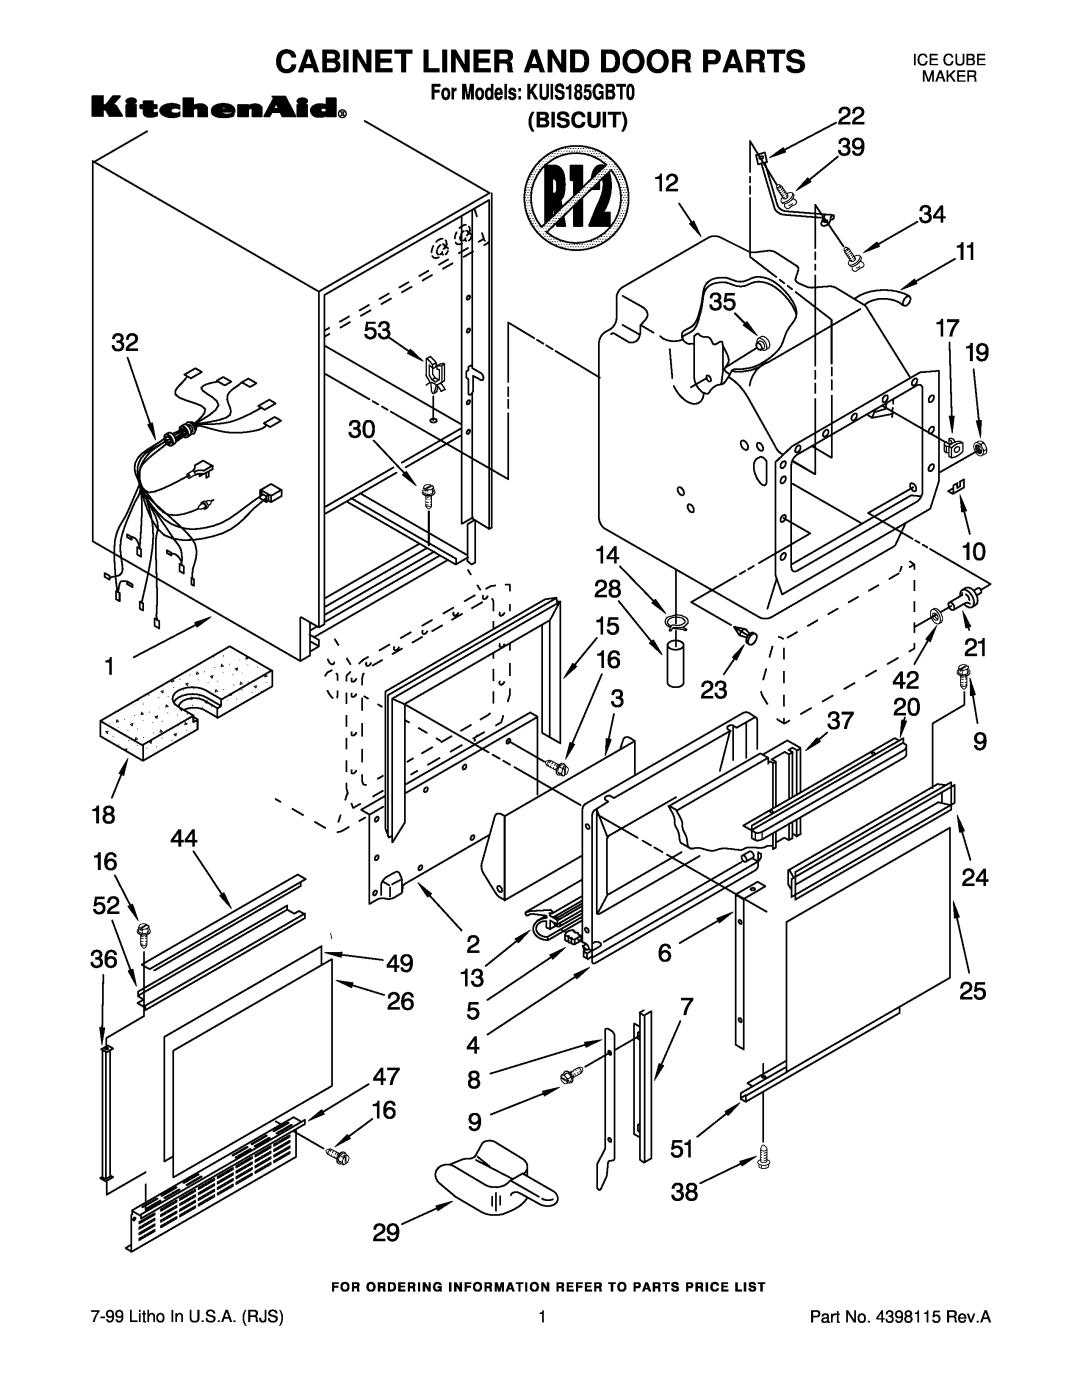 KitchenAid manual Cabinet Liner And Door Parts, Litho In U.S.A. RJS, For Models KUIS185GBT0 BISCUIT 